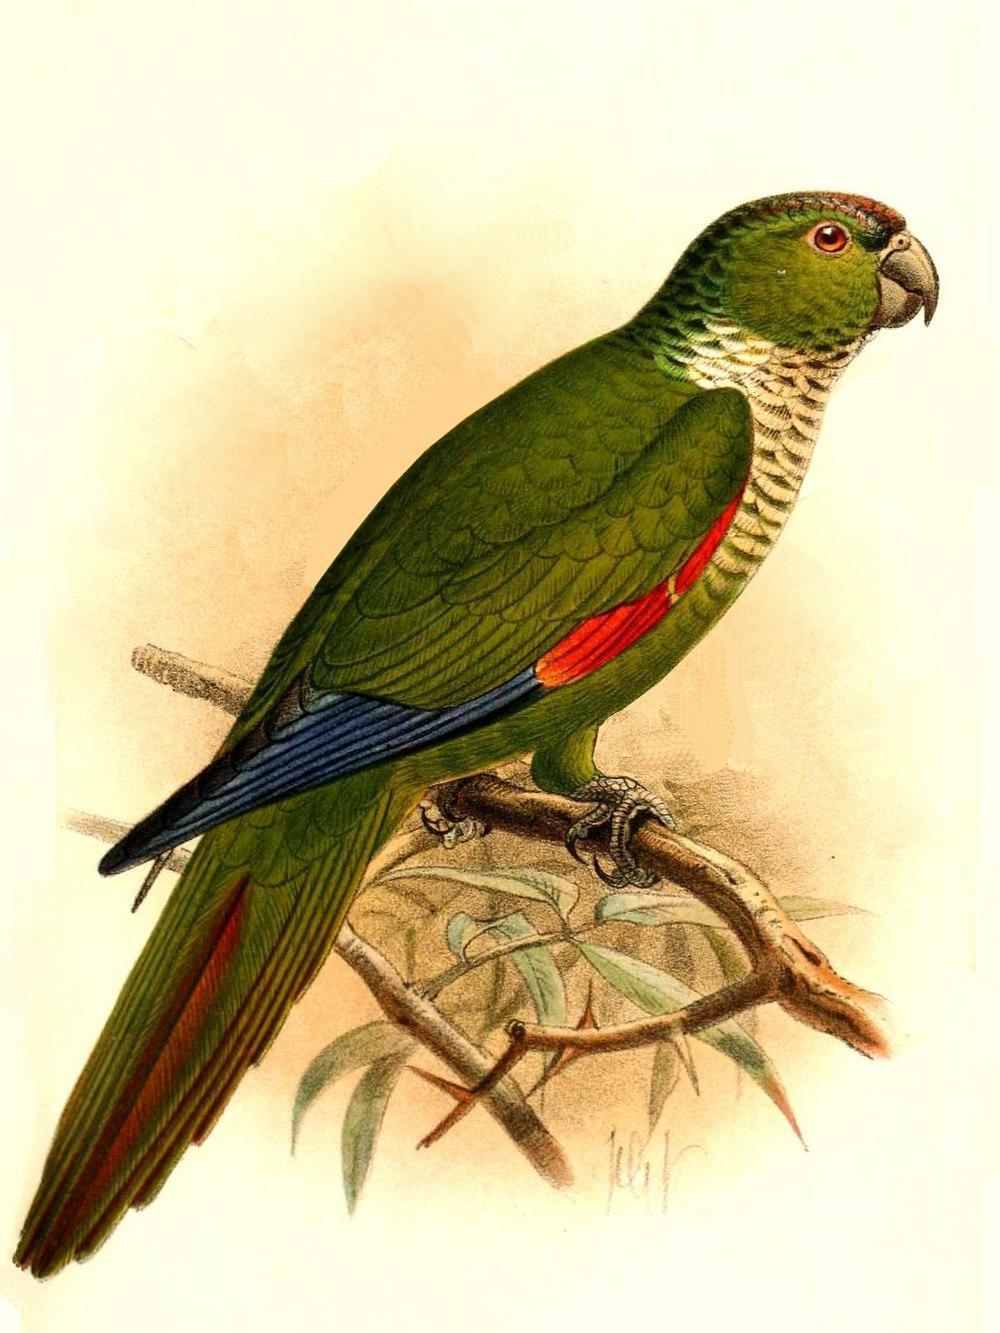 栗尾鹦哥 / Maroon-tailed Parakeet / Pyrrhura melanura